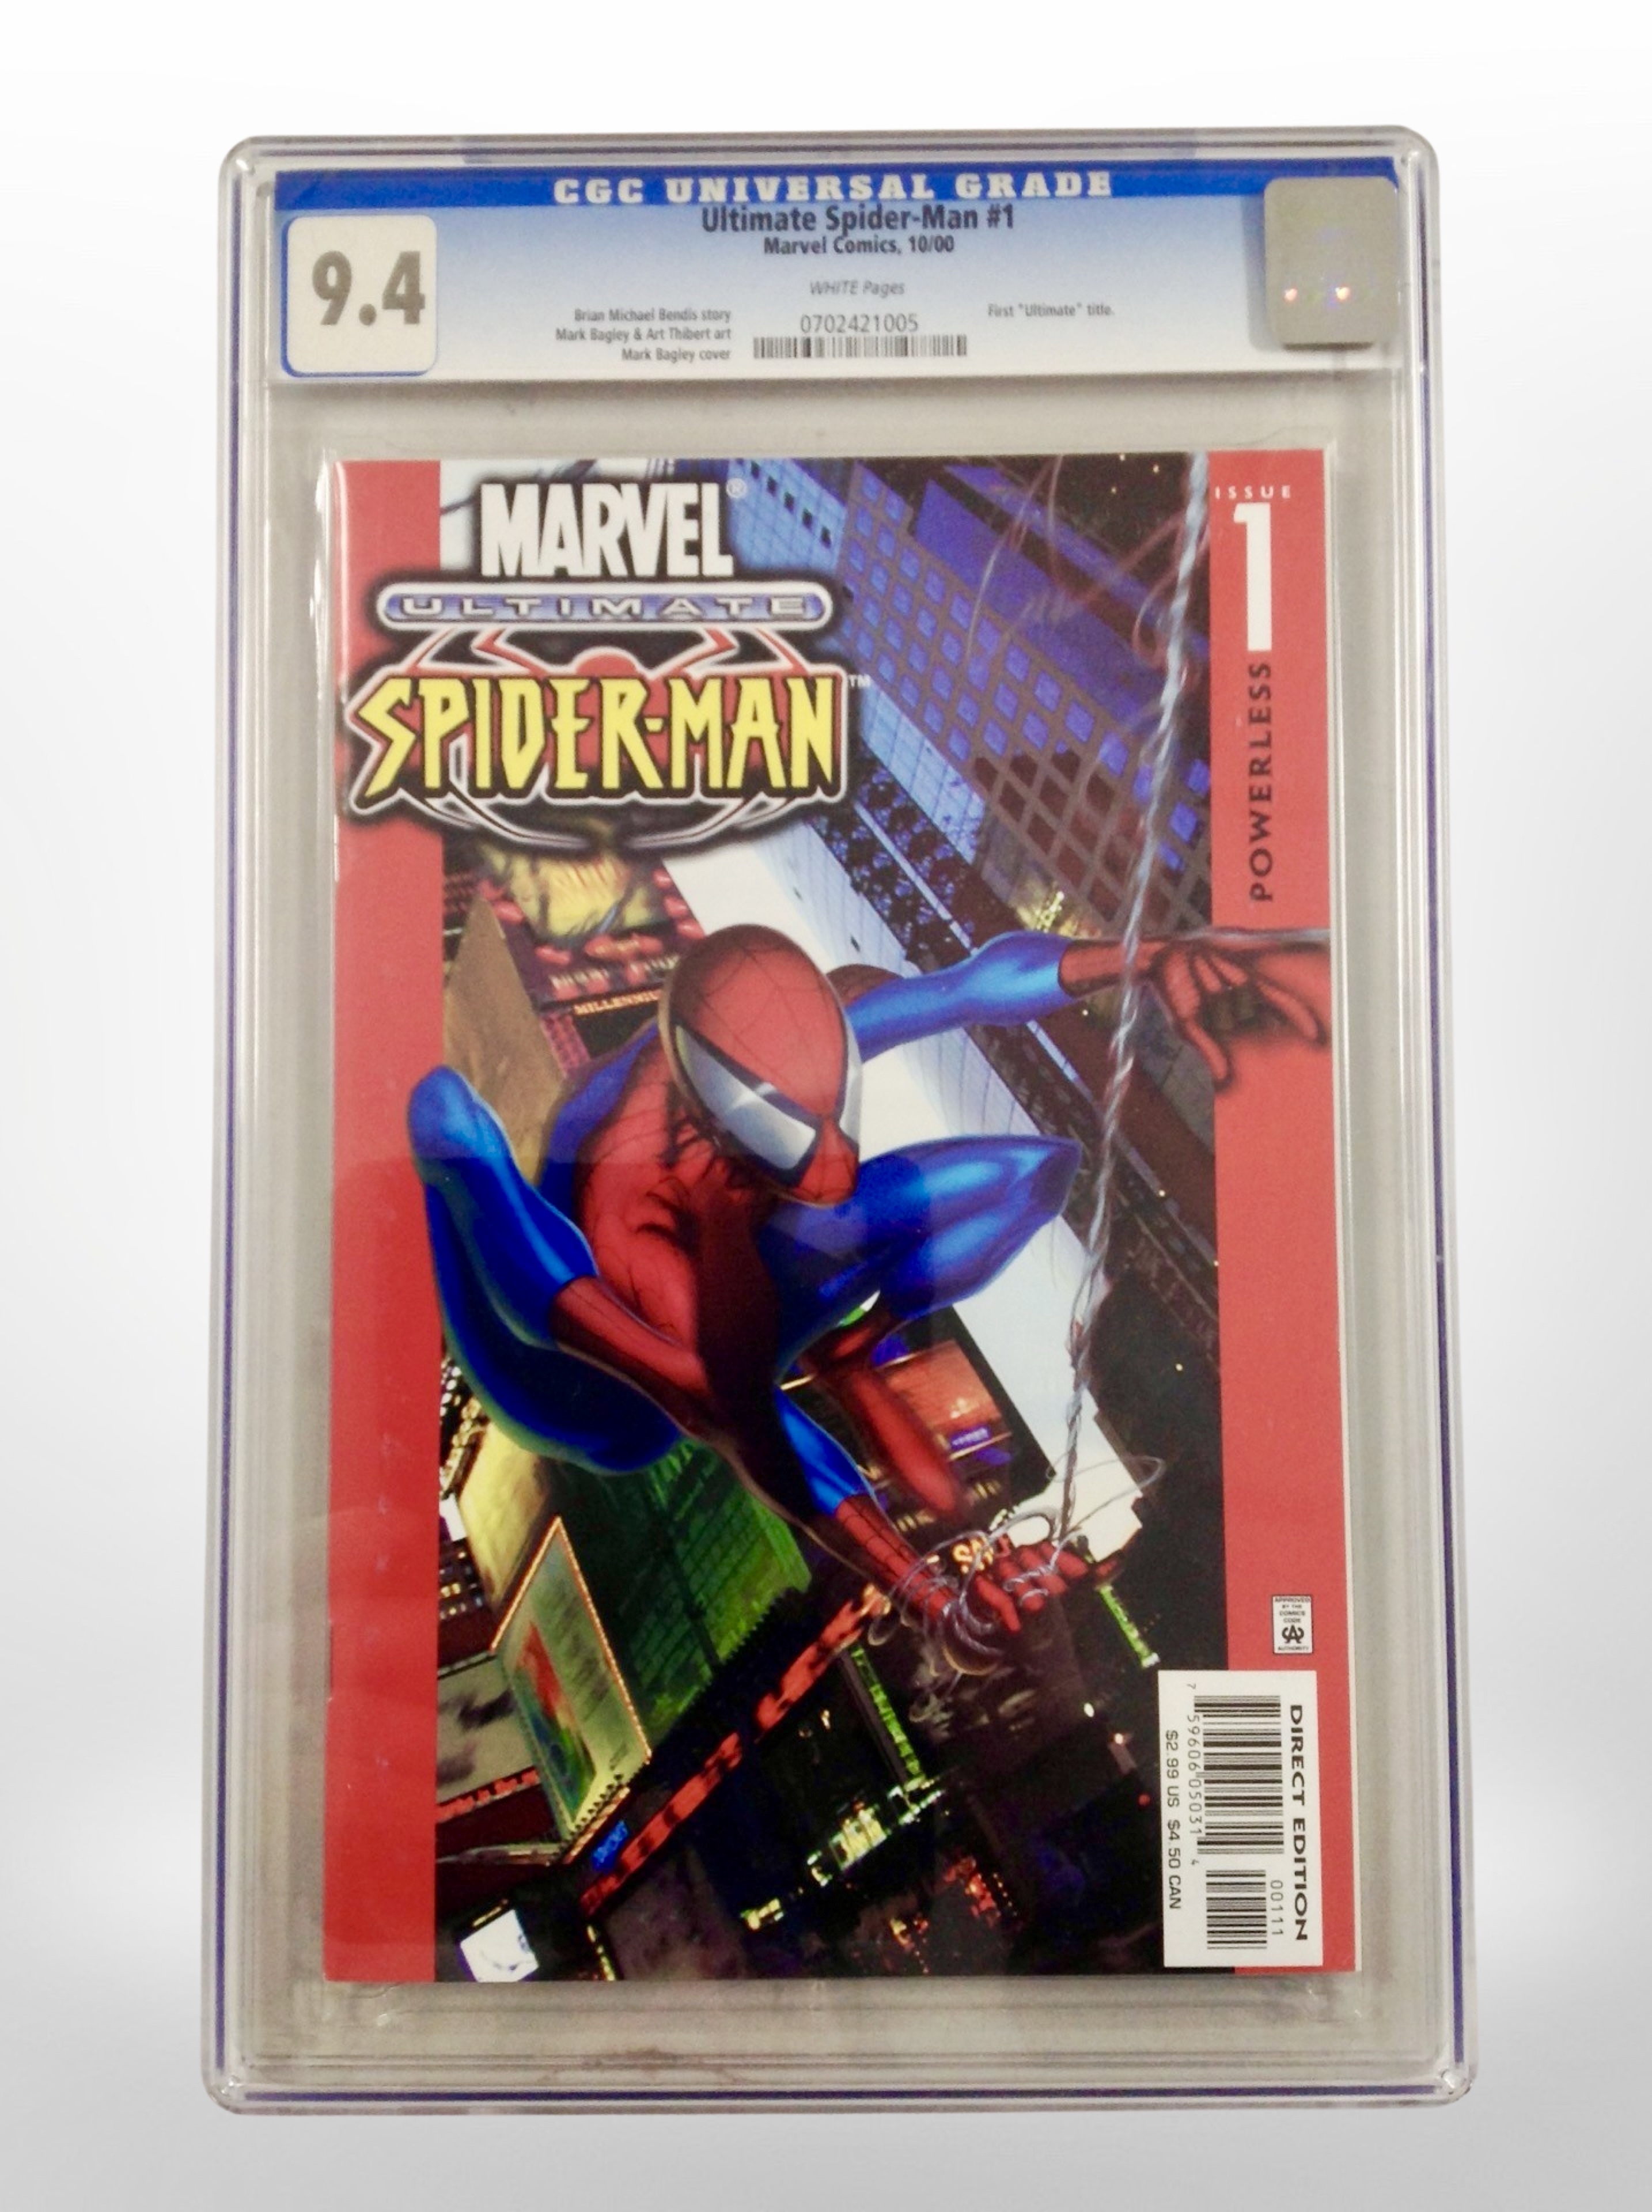 Marvel Comics : Ultimate Spider-Man Issue 1, CGC Universal Grade 9.4, slabbed.